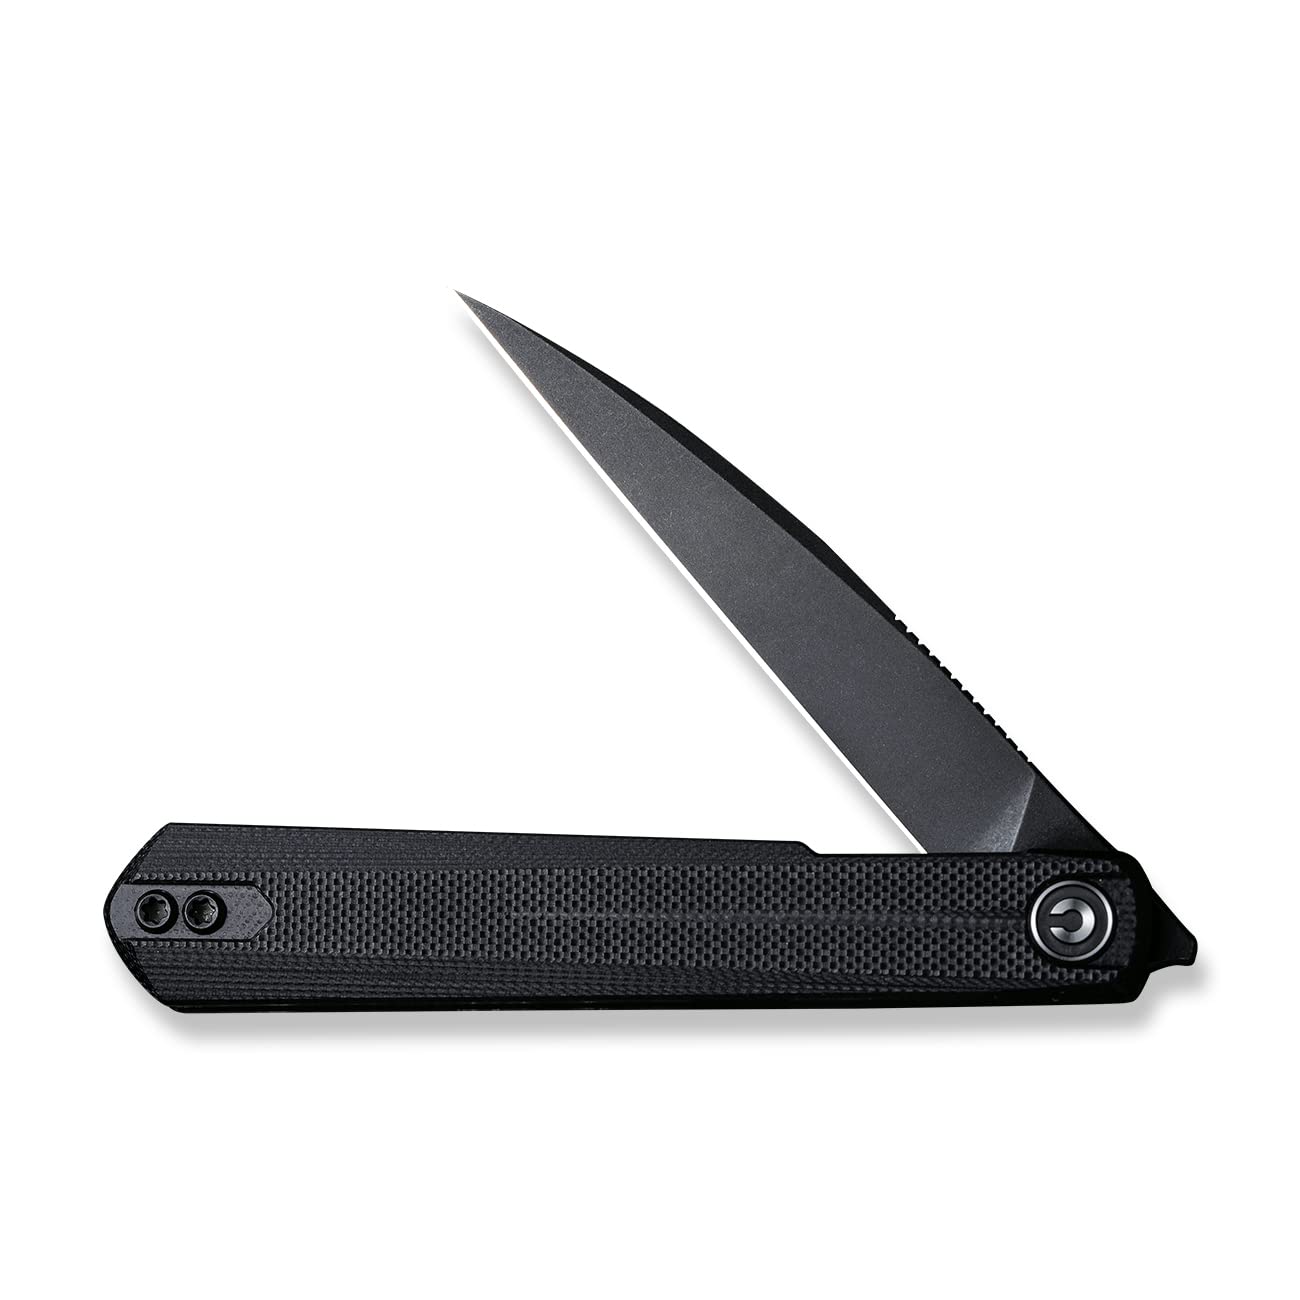 CIVIVI Clavi Folding Knife, Front Flipper Knife for Everyday Carry, 3.06" Nitro-V Steel Blade Black G10 Handle Pocket Knife for EDC C21019-1